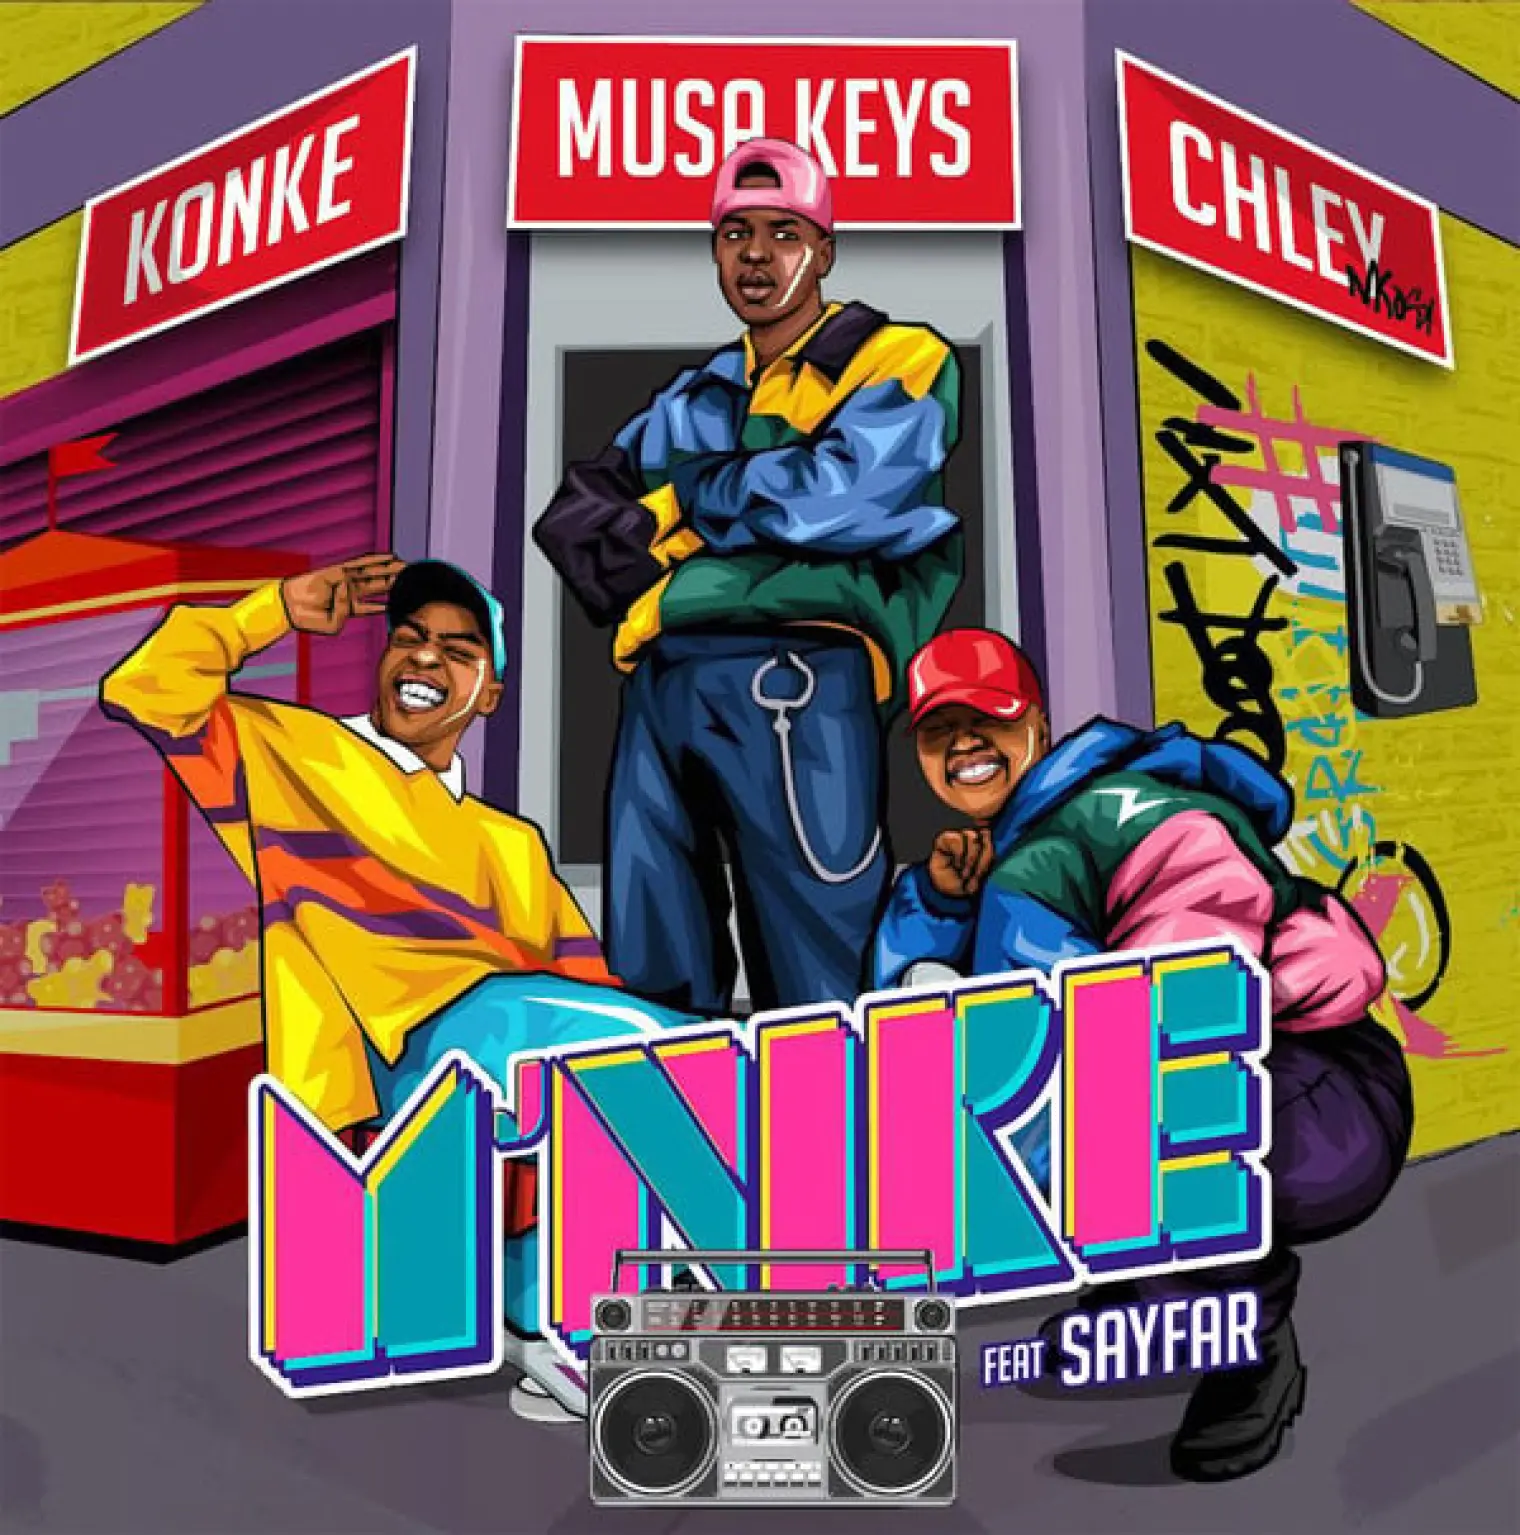 M'nike (Radio Edit) -  Konke 